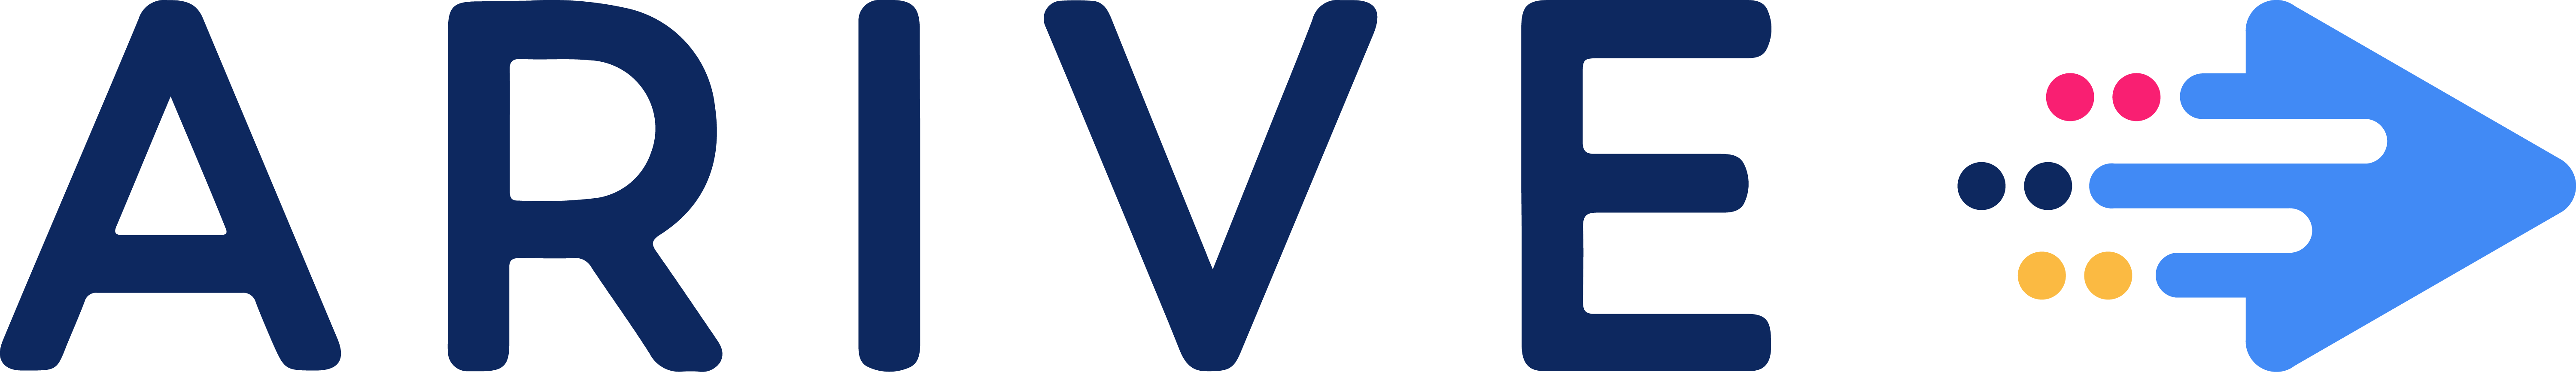 Arive (logo)